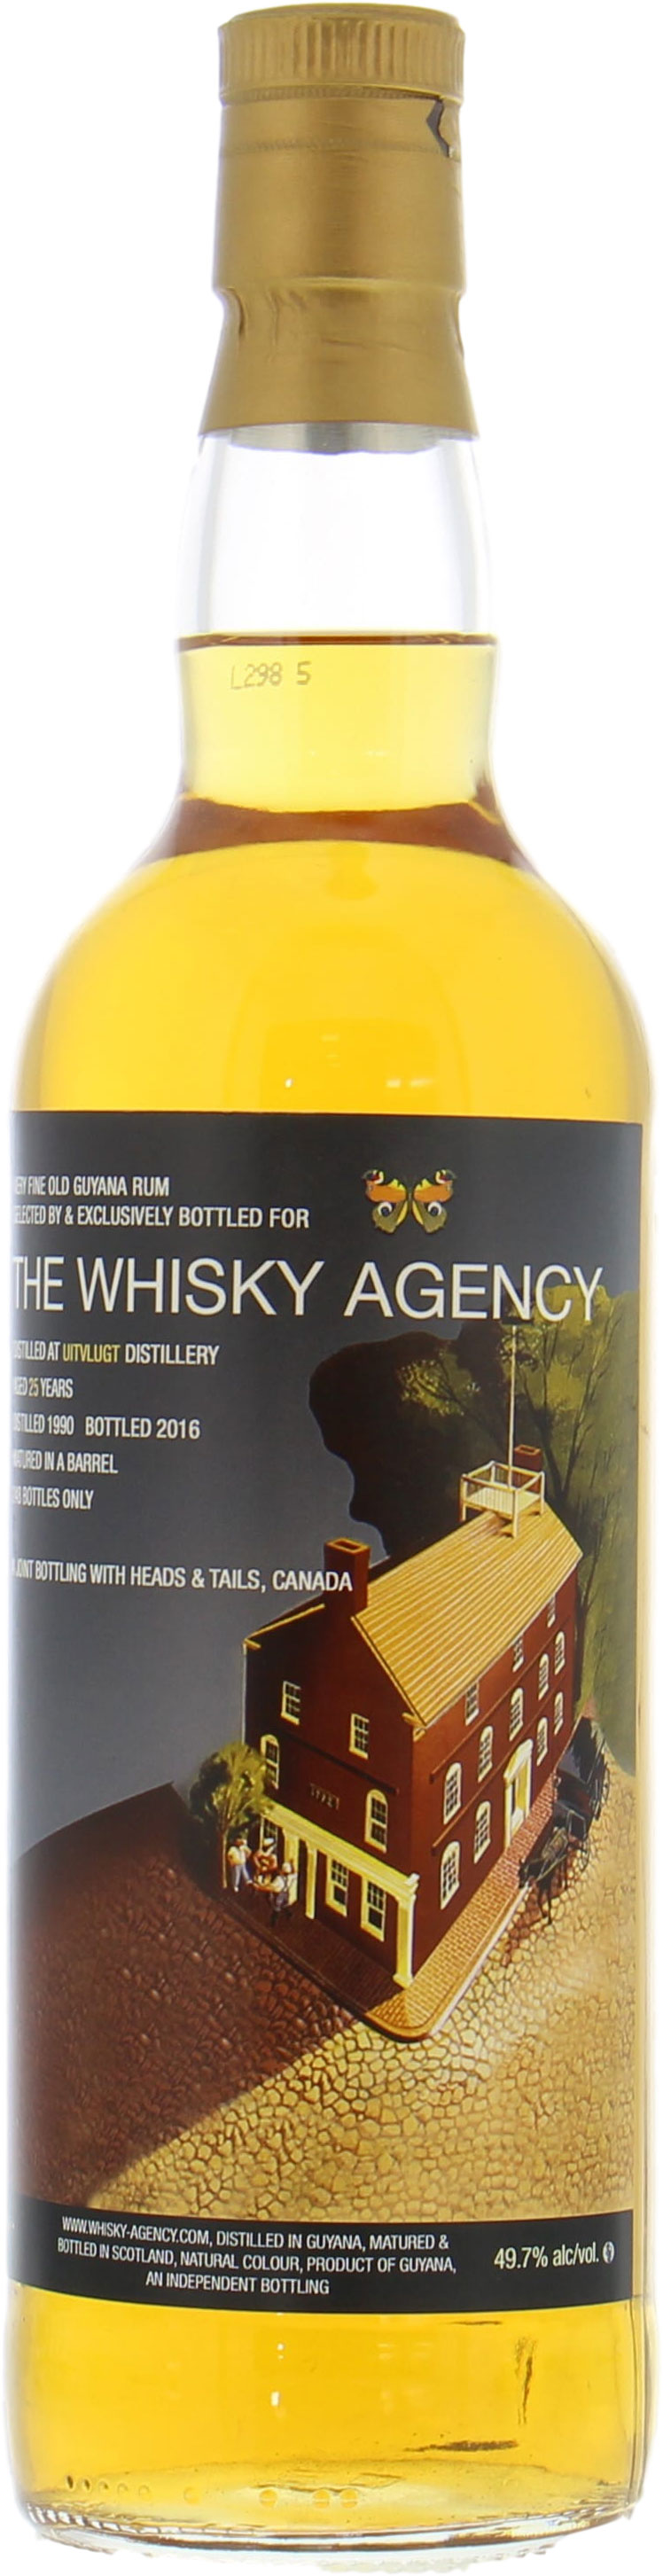 Uitvlugt - The whisky Agency 25 Years Old 49.7% 1990 Engels